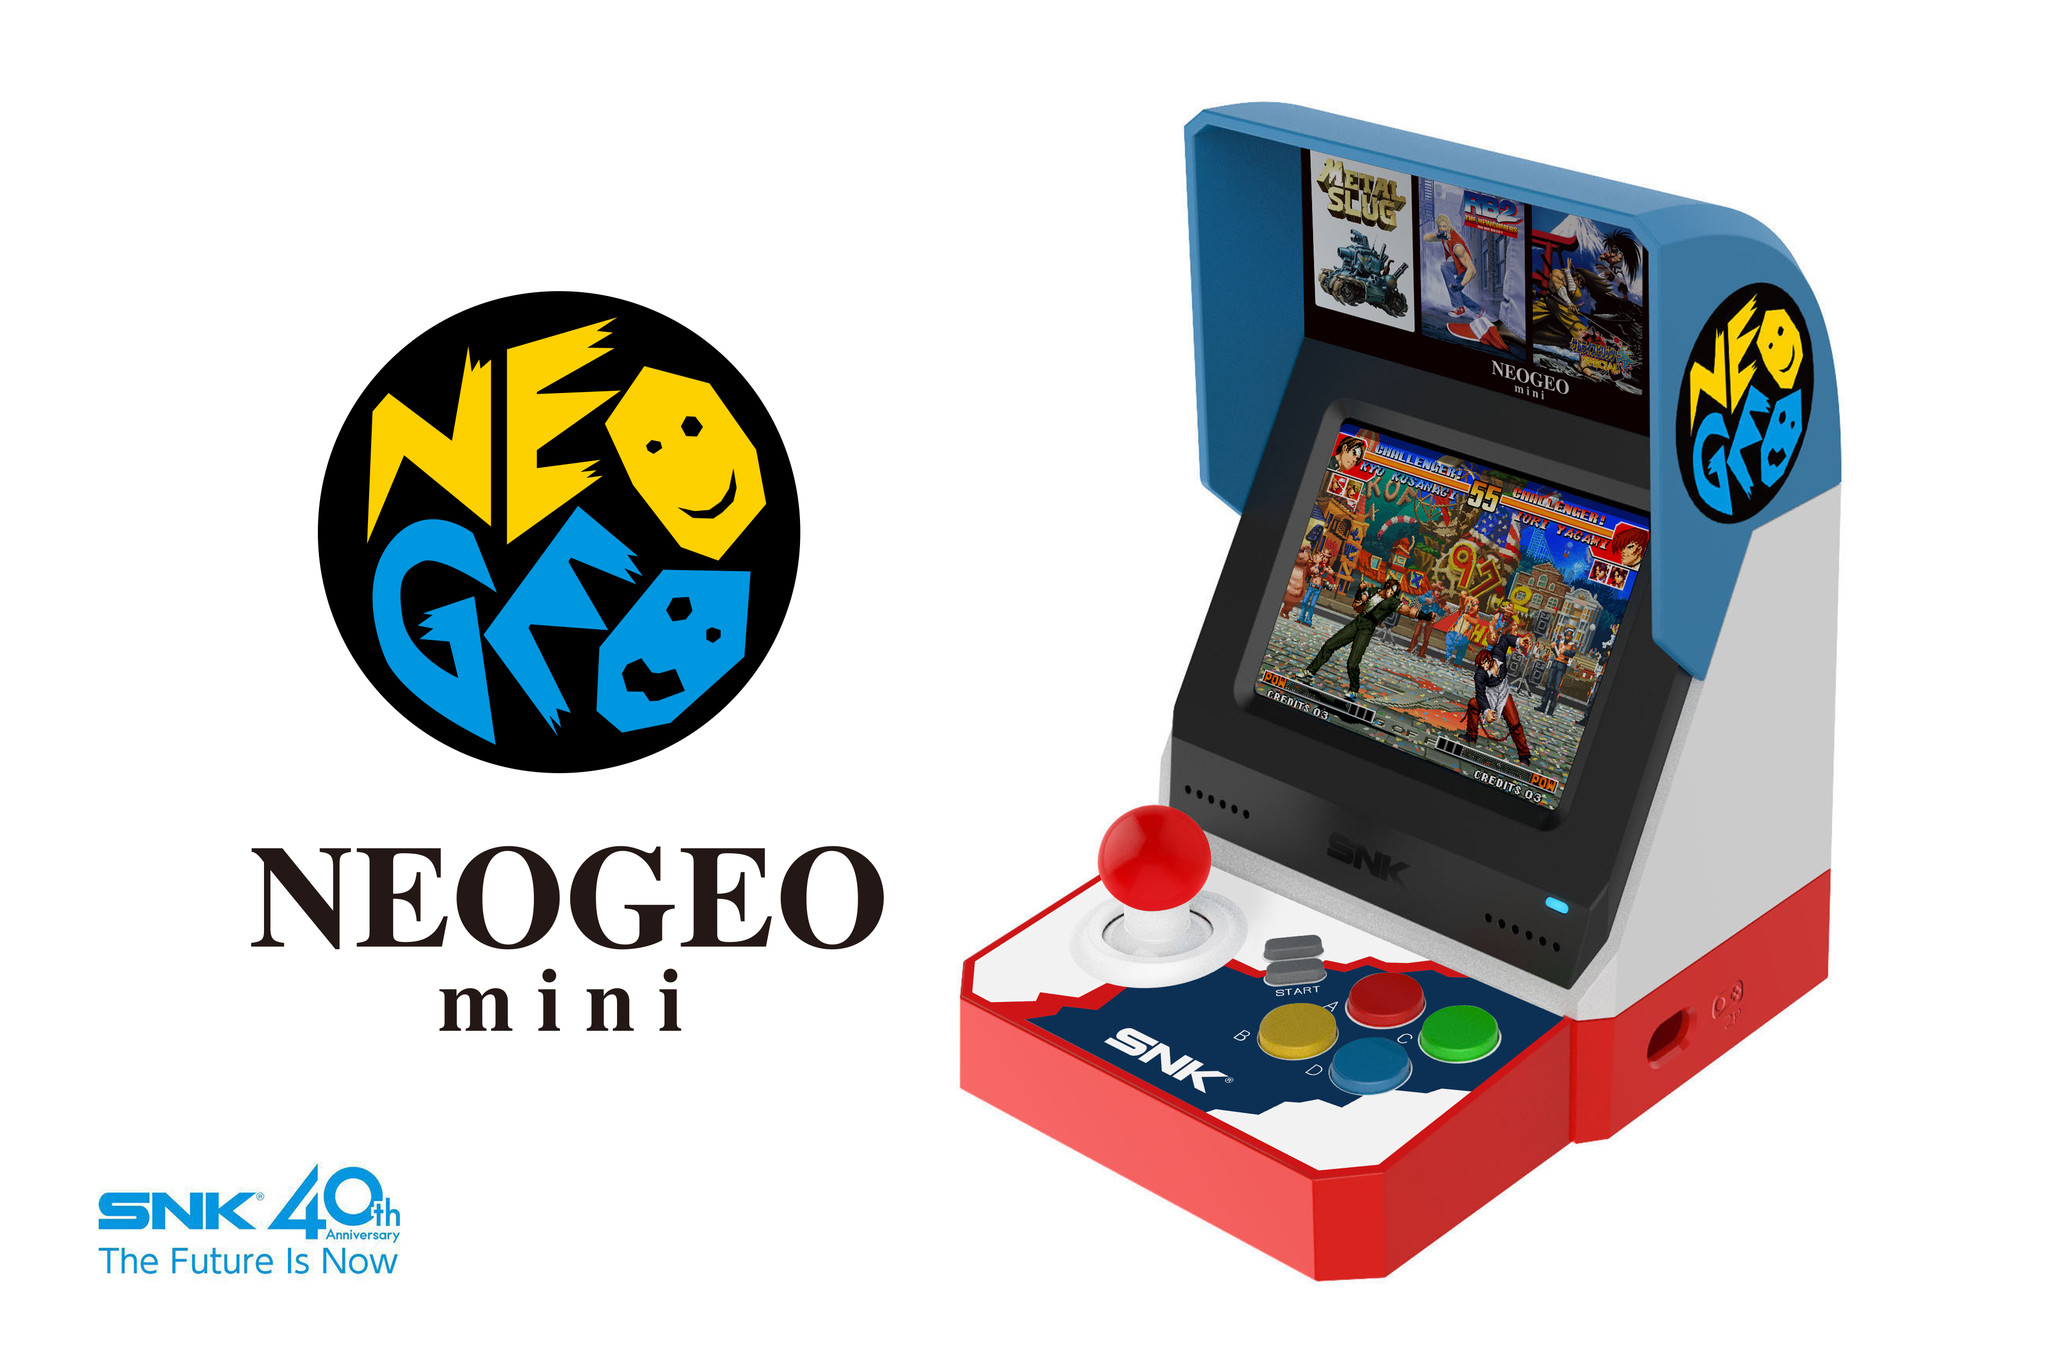 SNKブランド40周年を記念したゲーム機「NEOGEO mini」を発表 